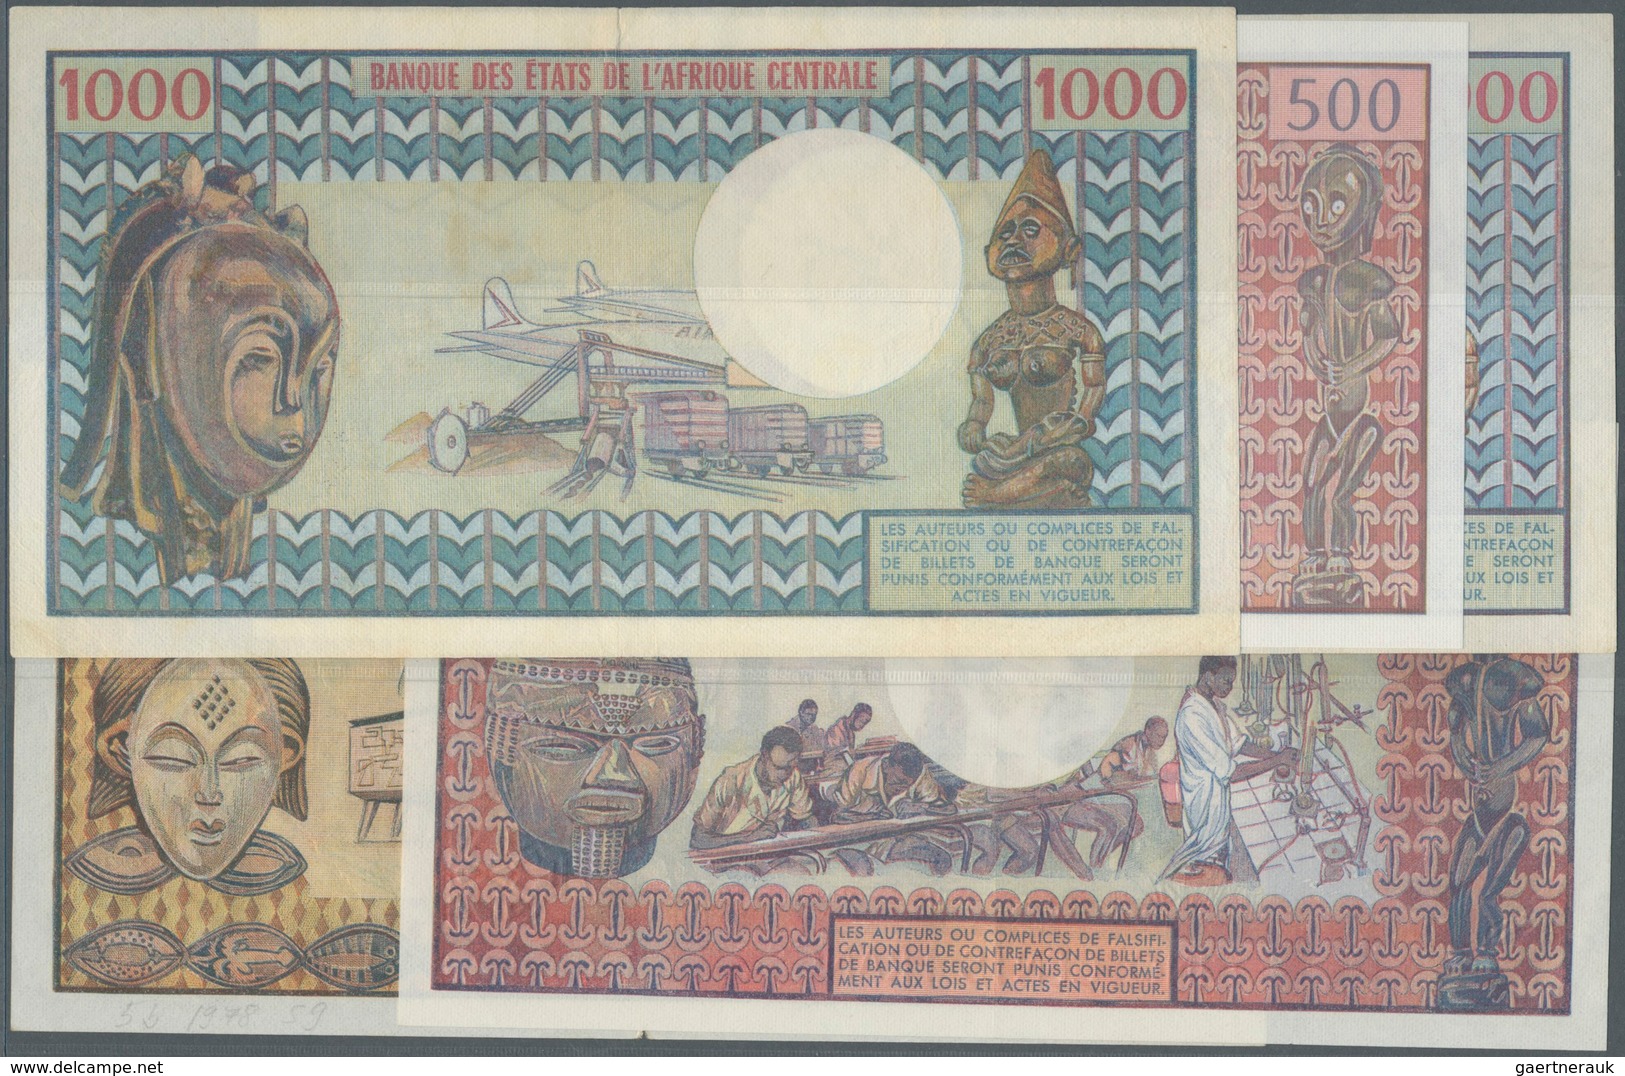 01284 Chad / Tschad: Republique Du Tchad, Set With 5 Banknotes Comprising 500 Francs 1970's P.2a In UNC, 1 - Ciad